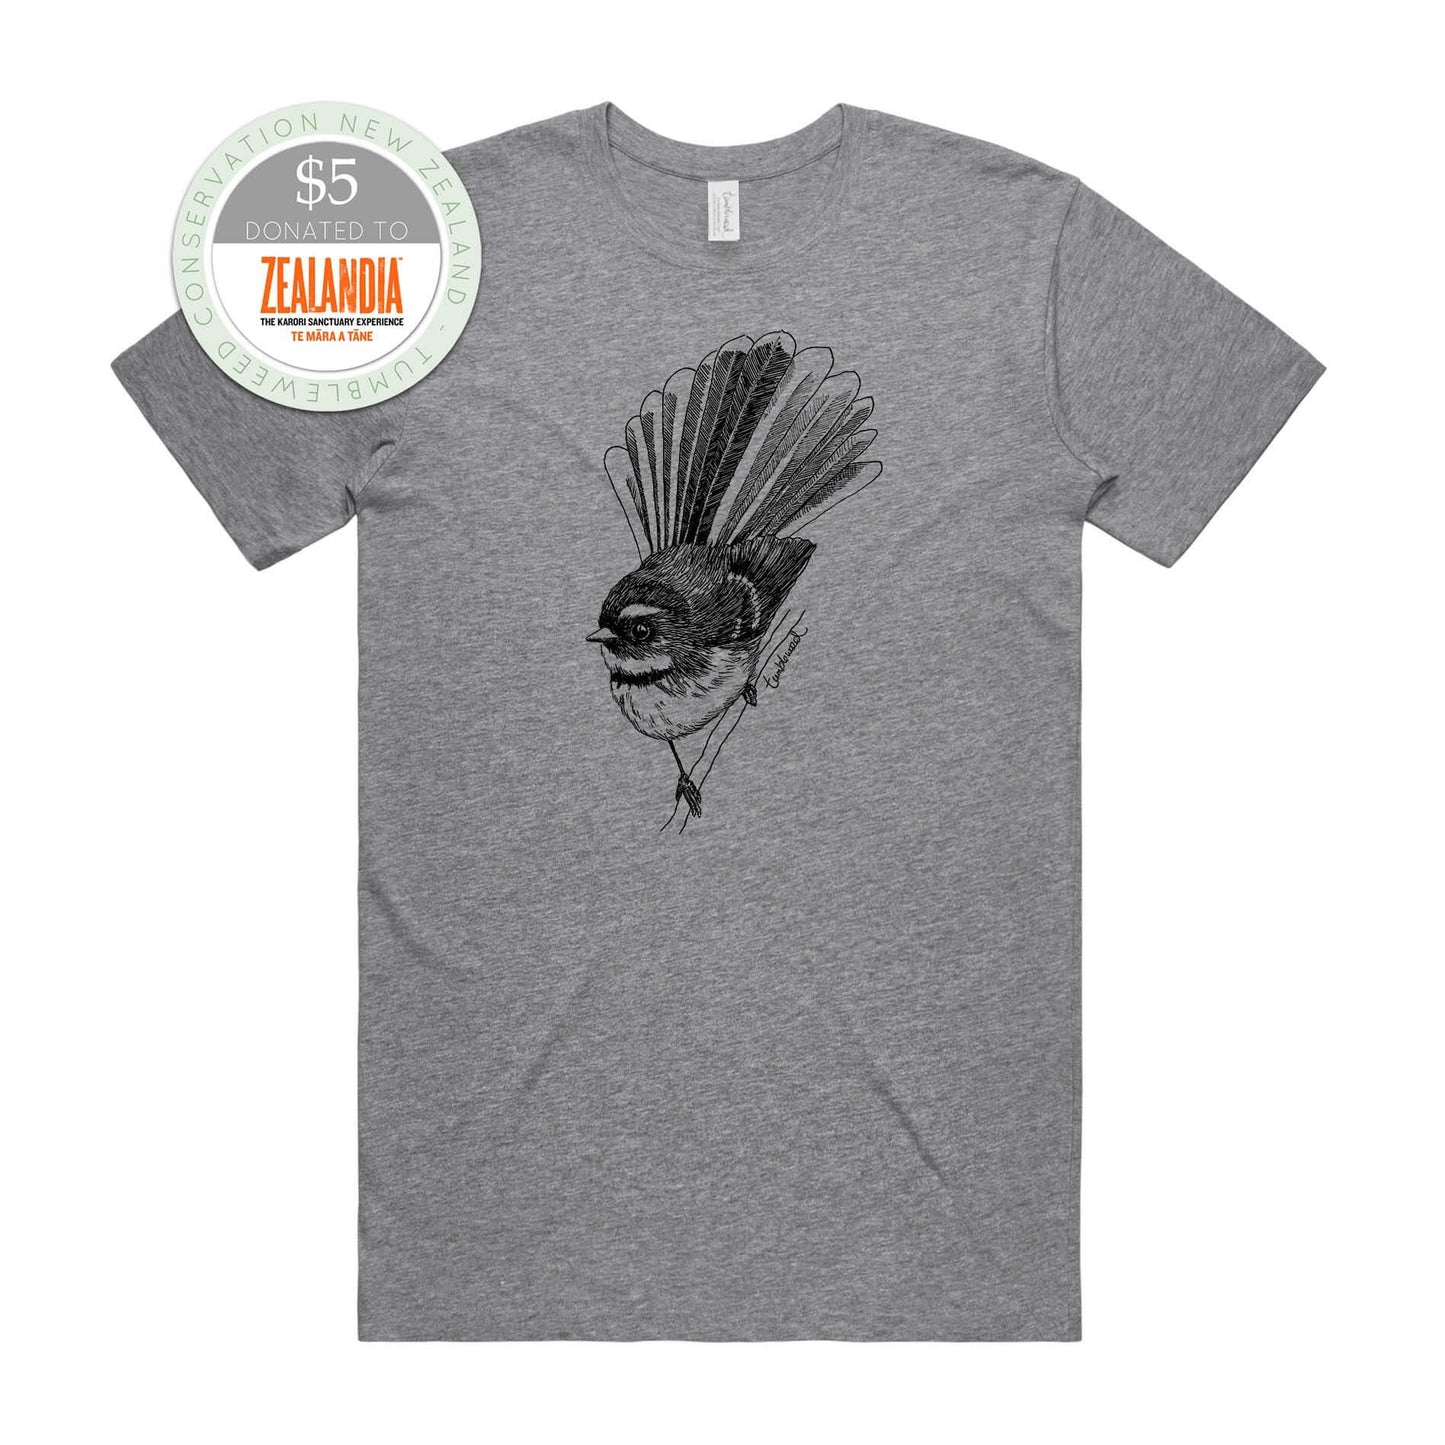 Sage, female t-shirt featuring a screen printed Fantail/Pīwakawaka design.